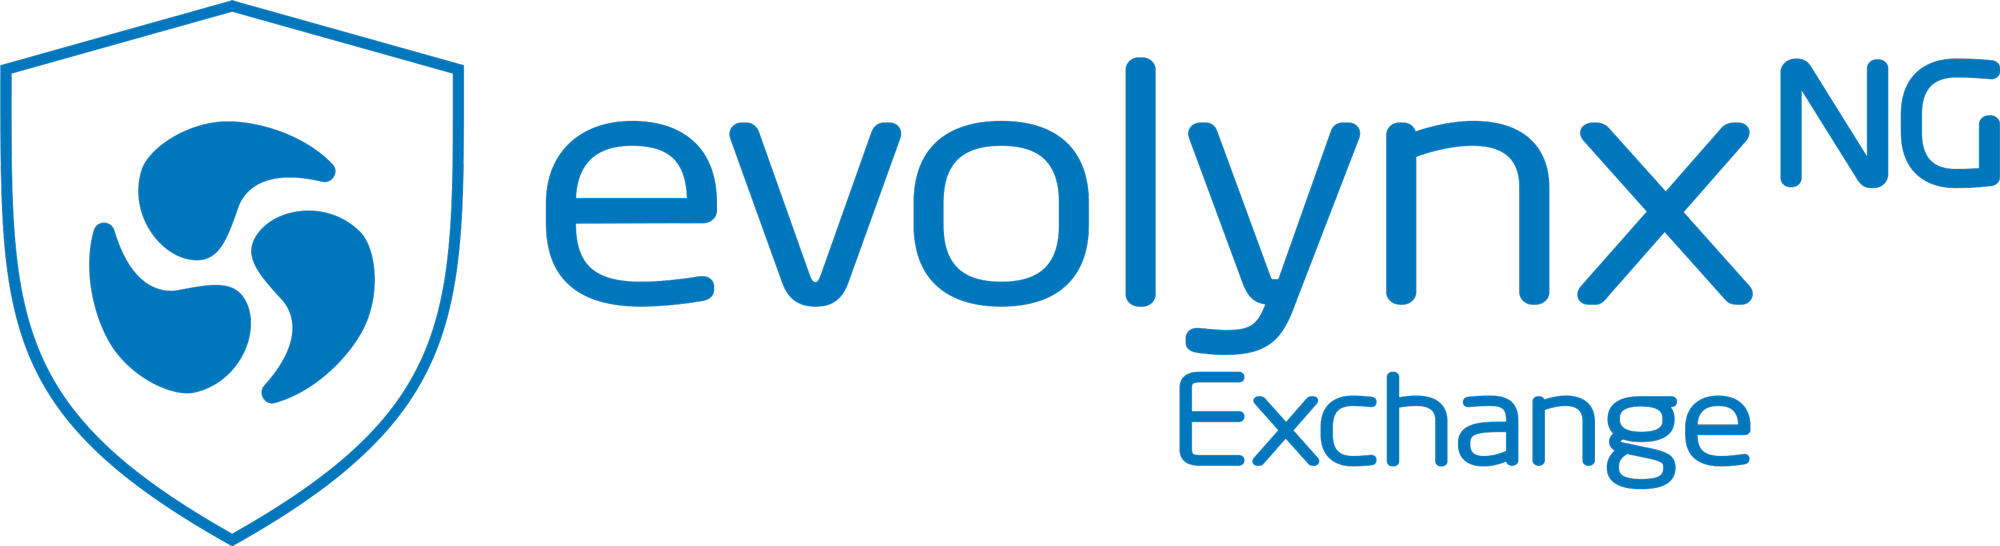 logo evolynxNG software exchange